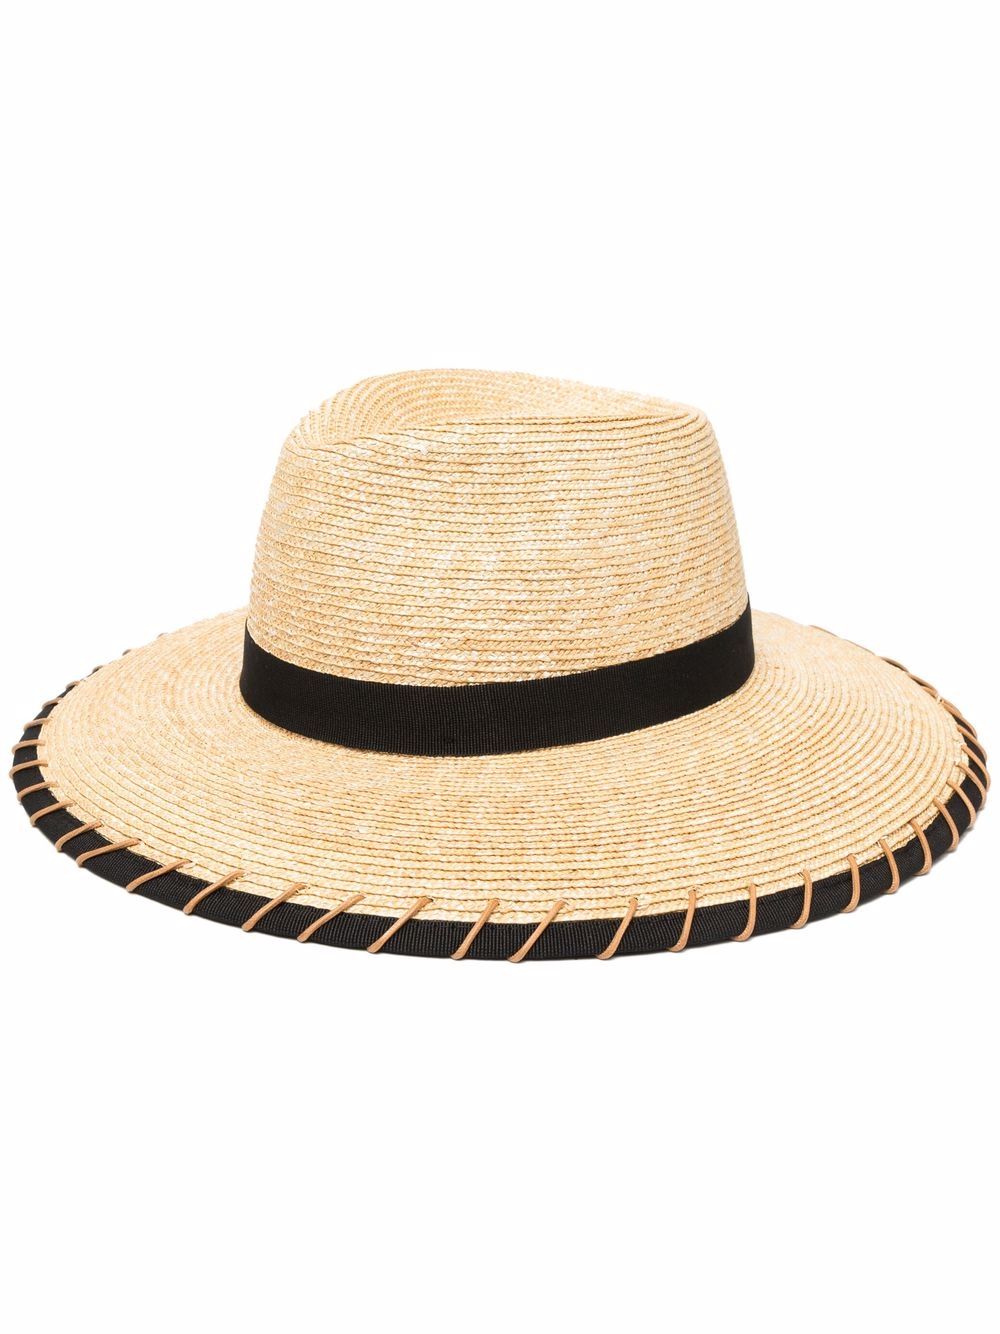 catarzi - woven straw sun hat - women - Straw - 56 - Neutrals